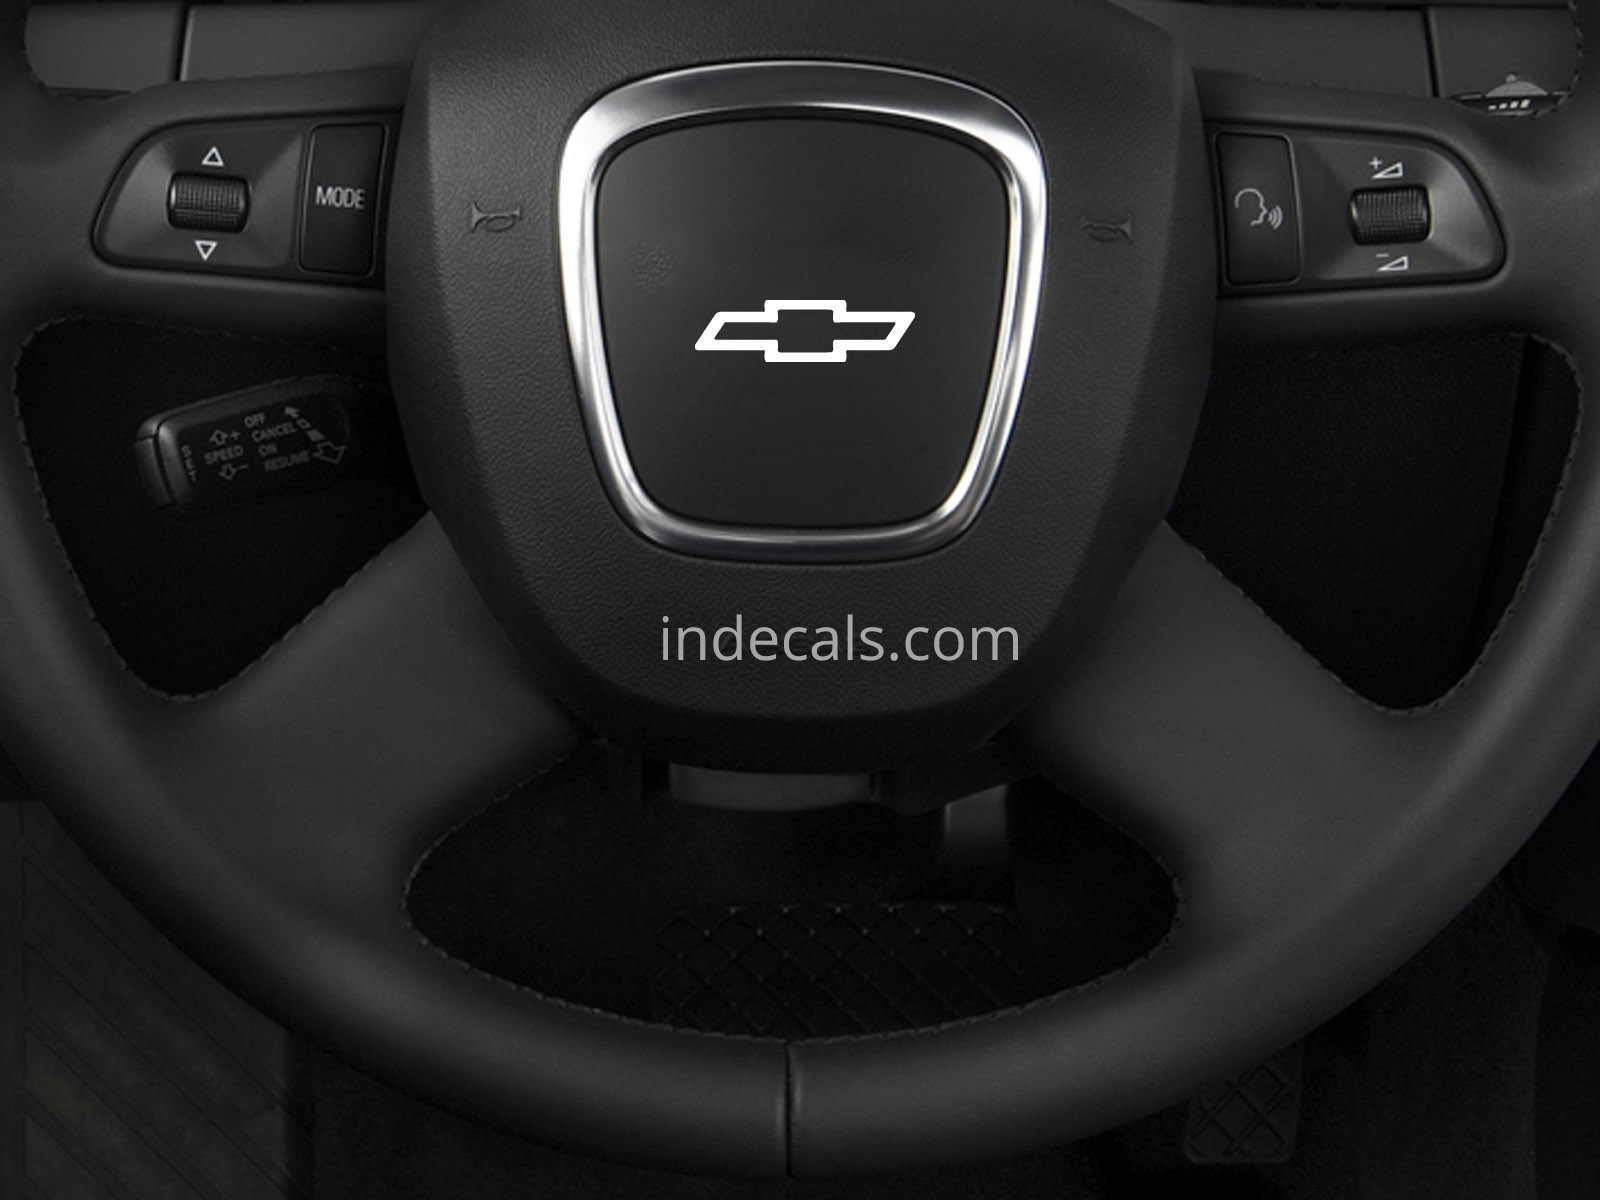 3 x Chevrolet Stickers for Steering Wheel - White